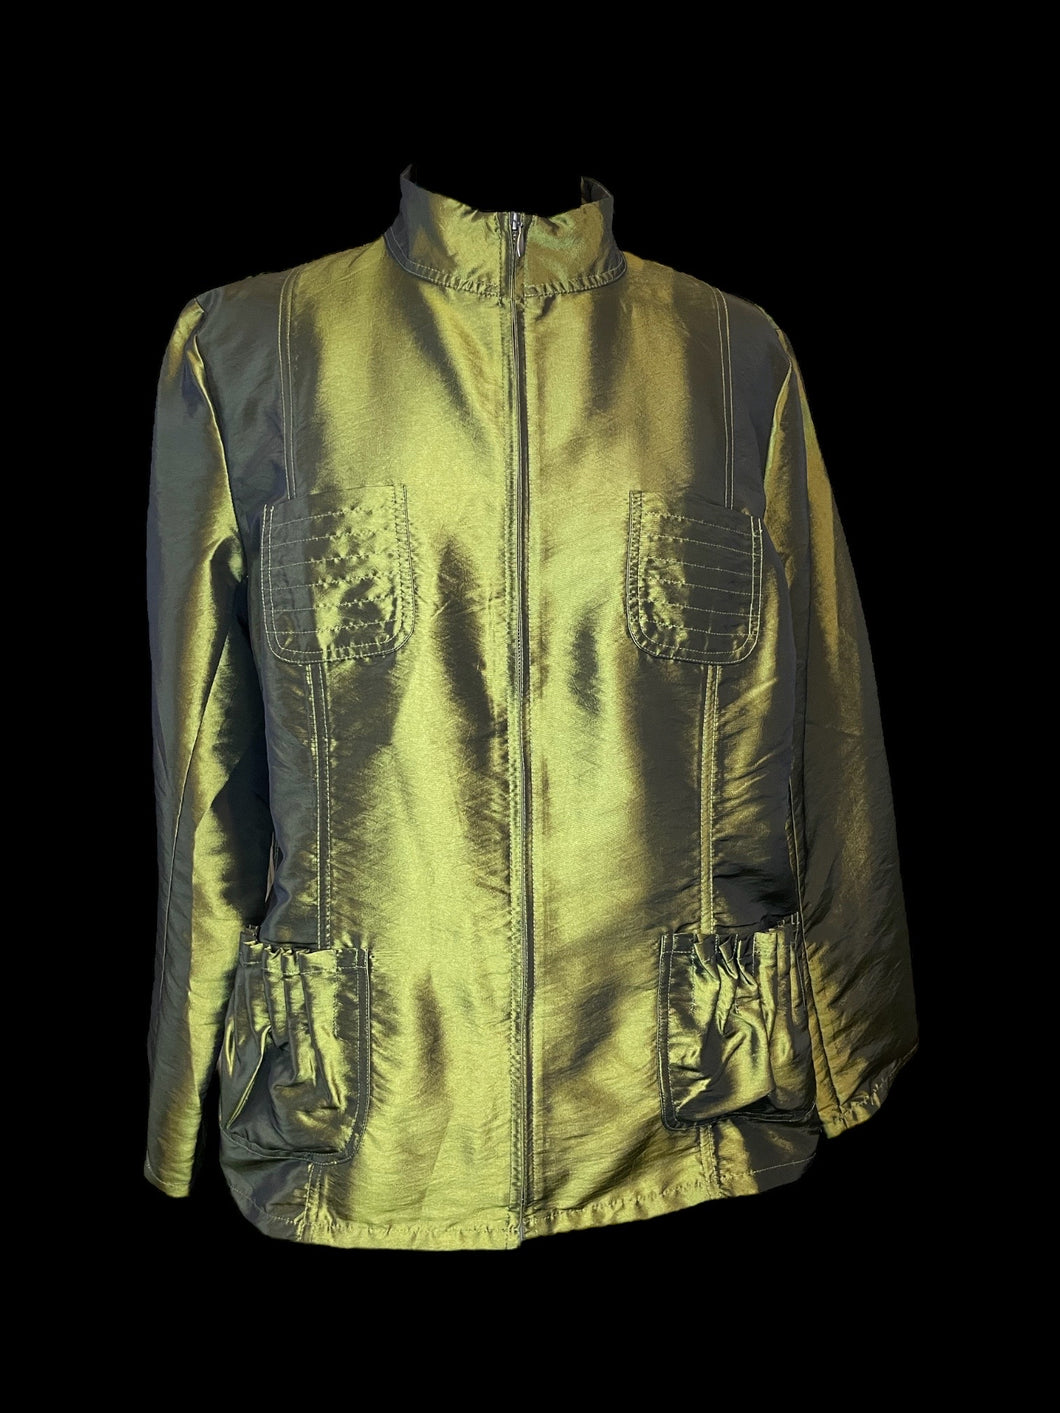 1X NWT Olive green high neckline zip-up jacket w/ pleating details, & pockets